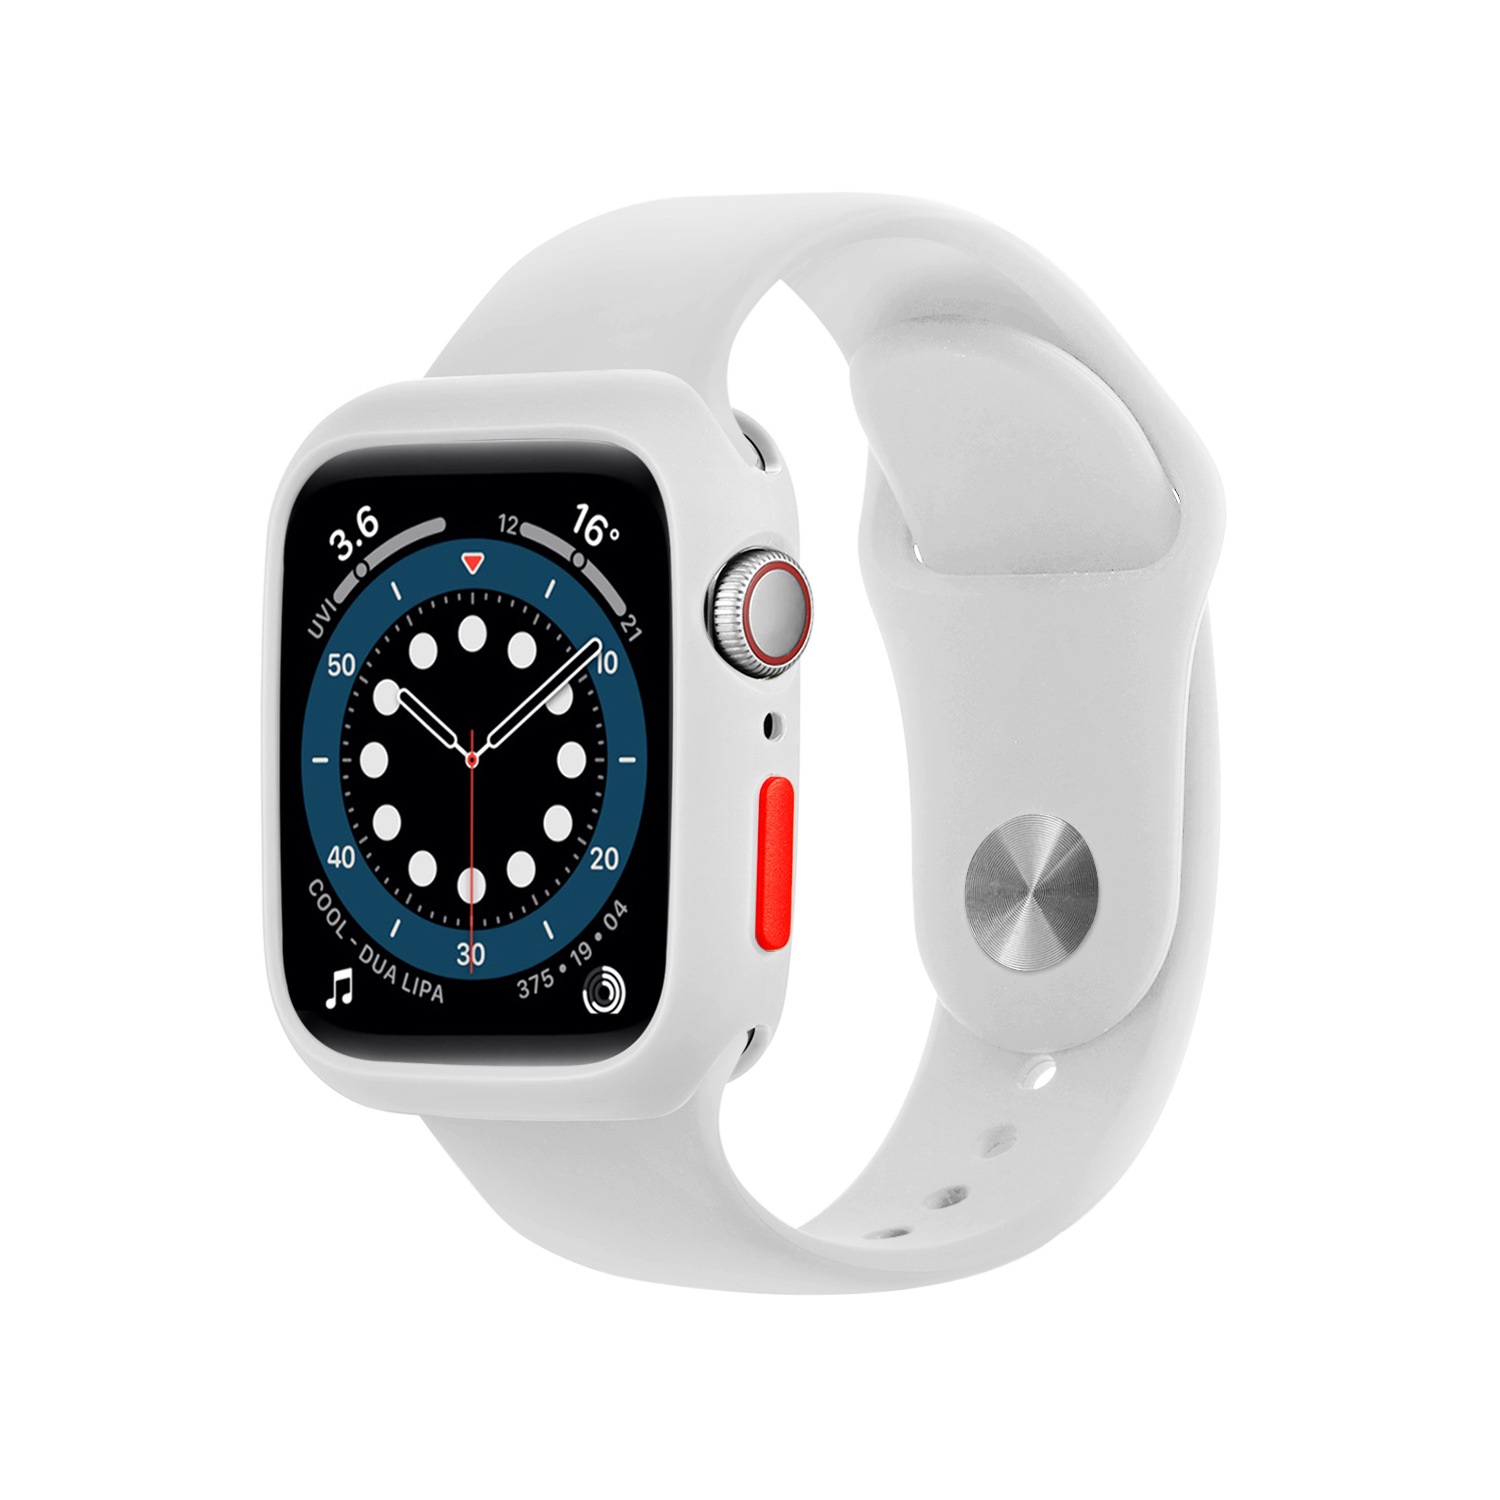 Ốp Lưng Silicone Khóa Kim Loại Cho Apple Watch Iwatch 1 2 3 4 5 6